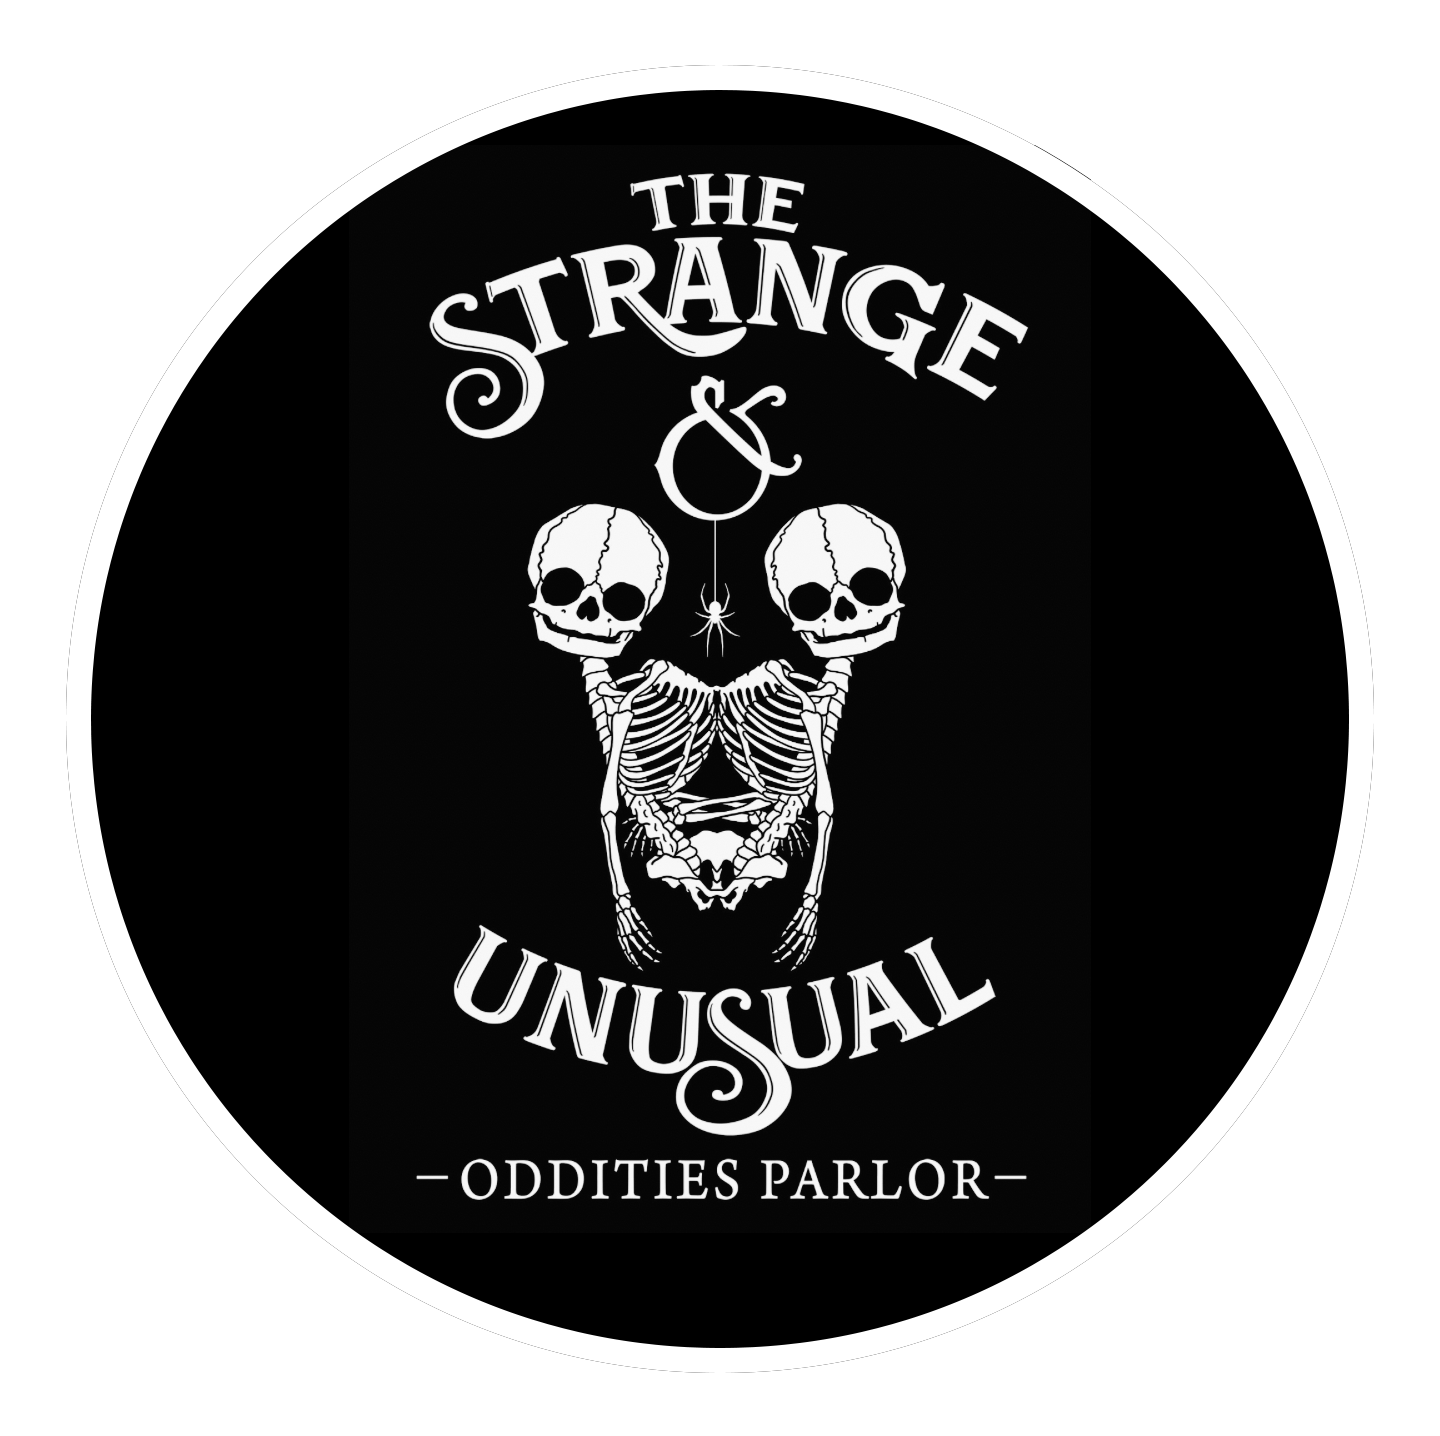 The Strange and Unusual